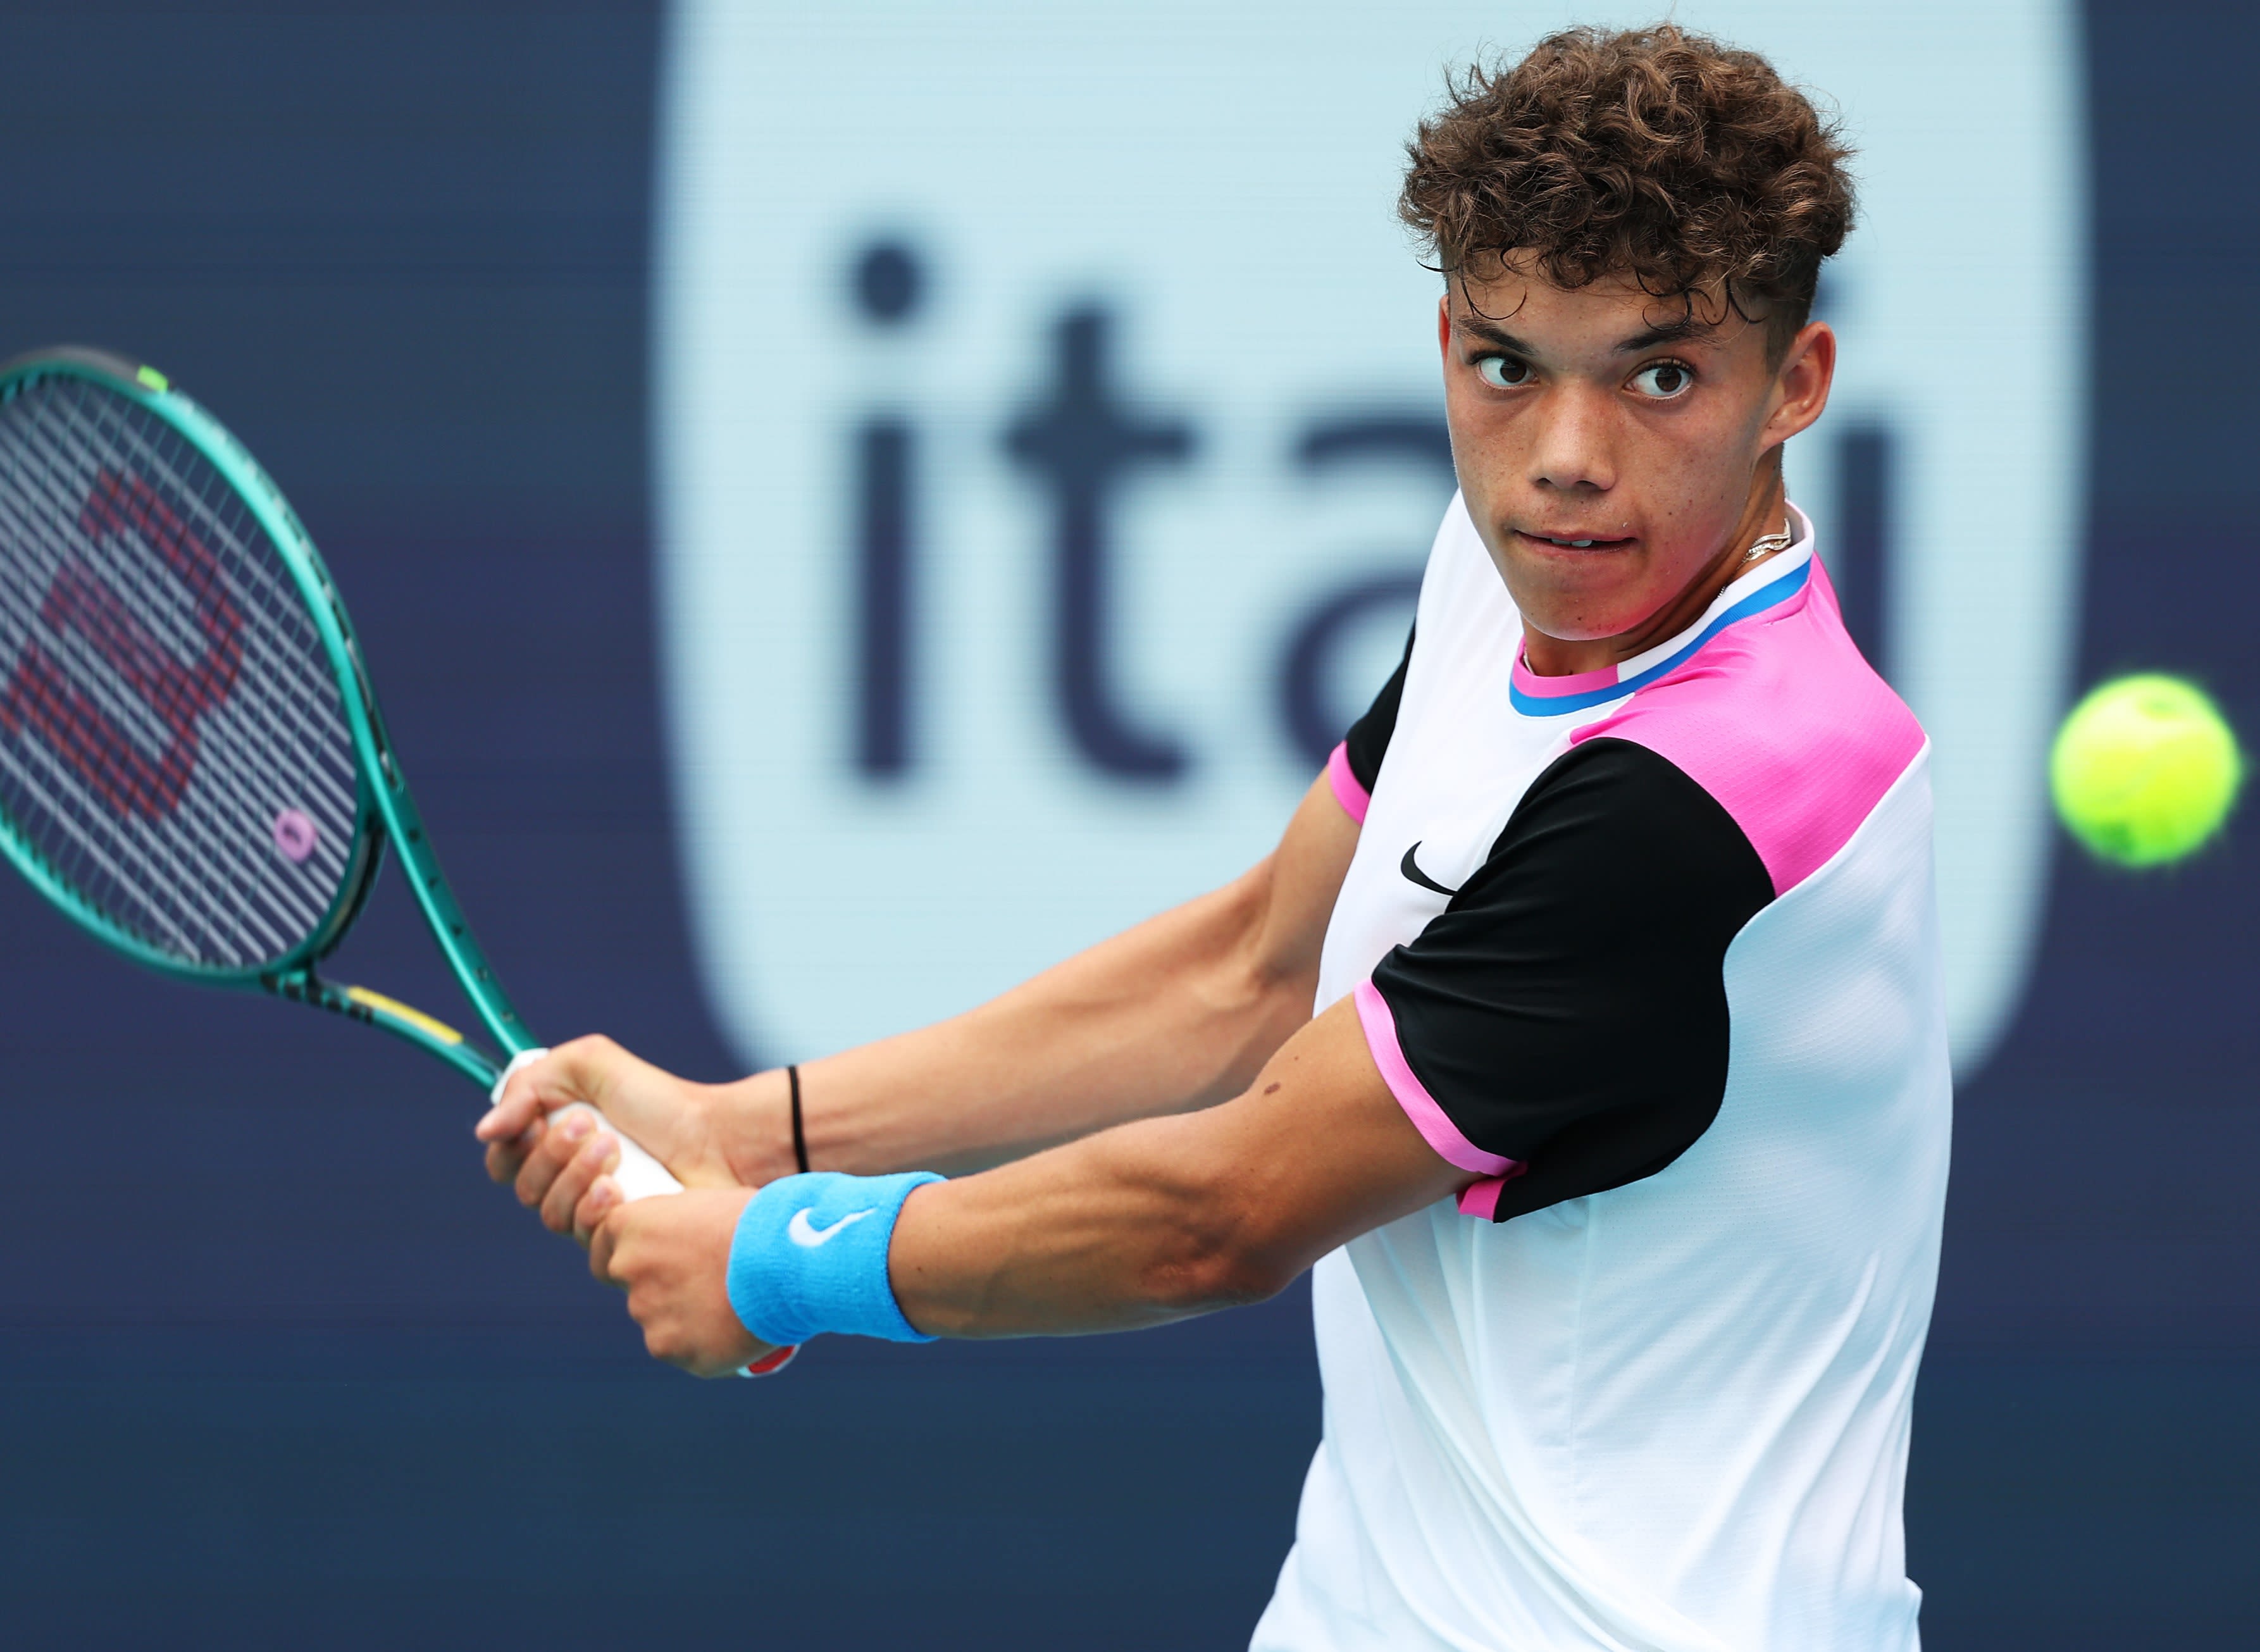 Darwin Blanch, 16, has hilarious reaction to drawing Rafael Nadal at Mutua Madrid Open | Tennis.com